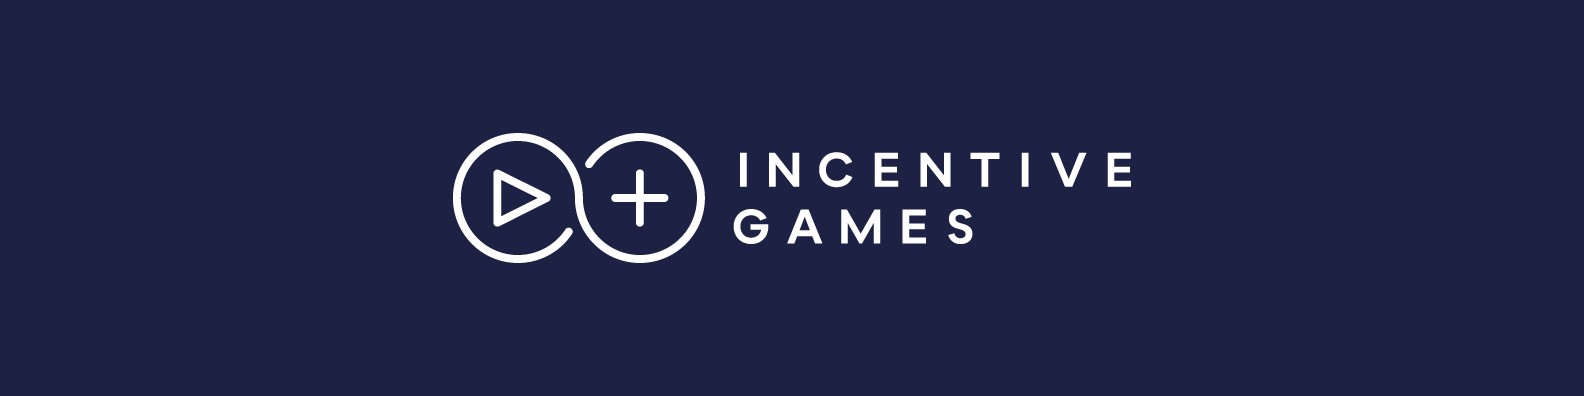 Incentive Games tie-up with BtoBet